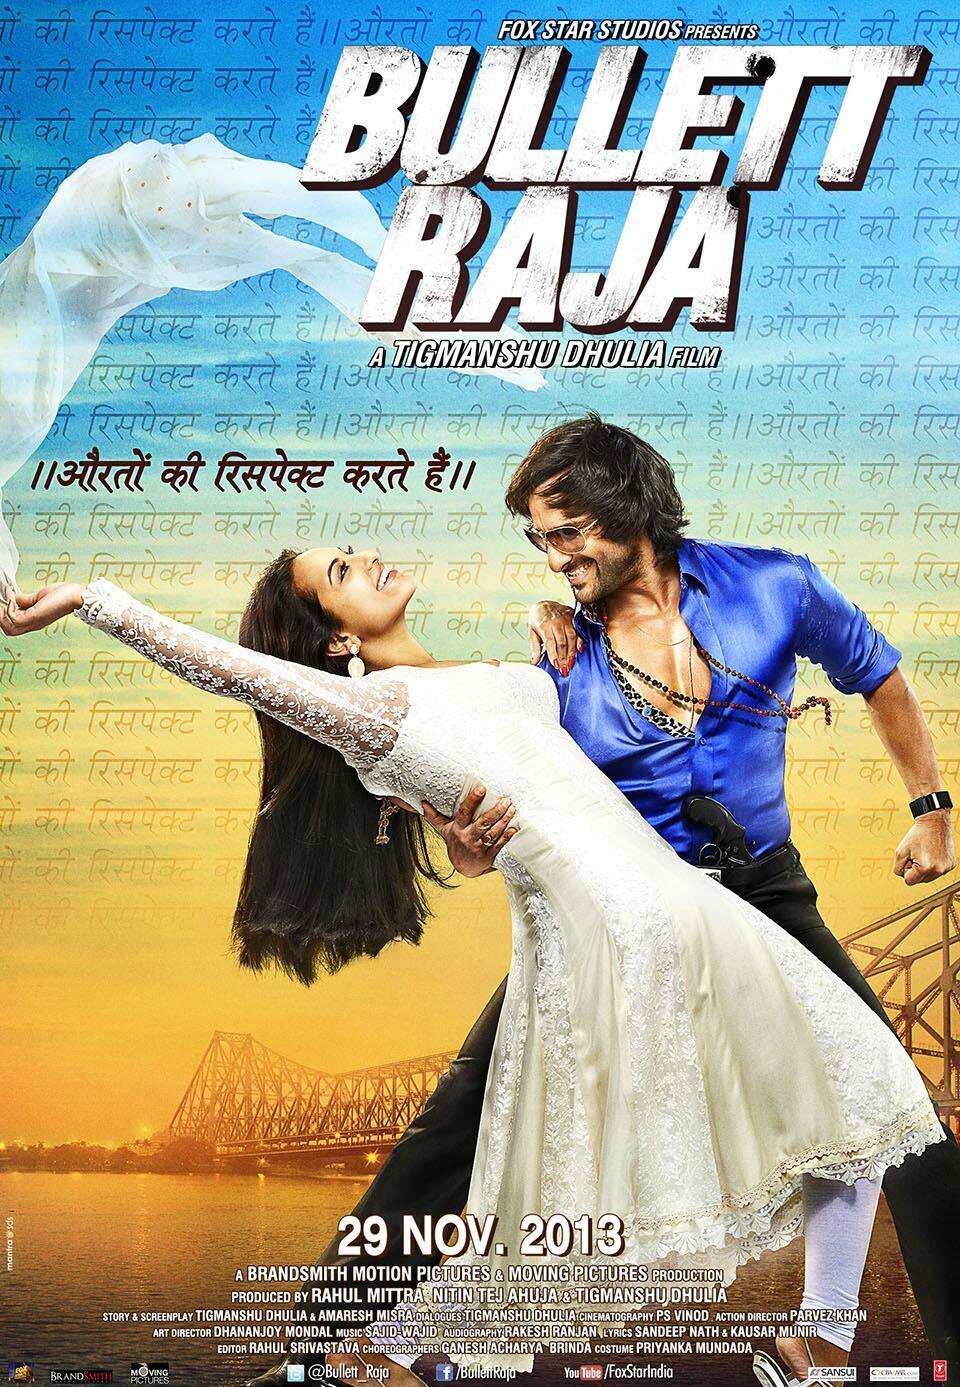 Hindi poster of the movie Bullett Raja